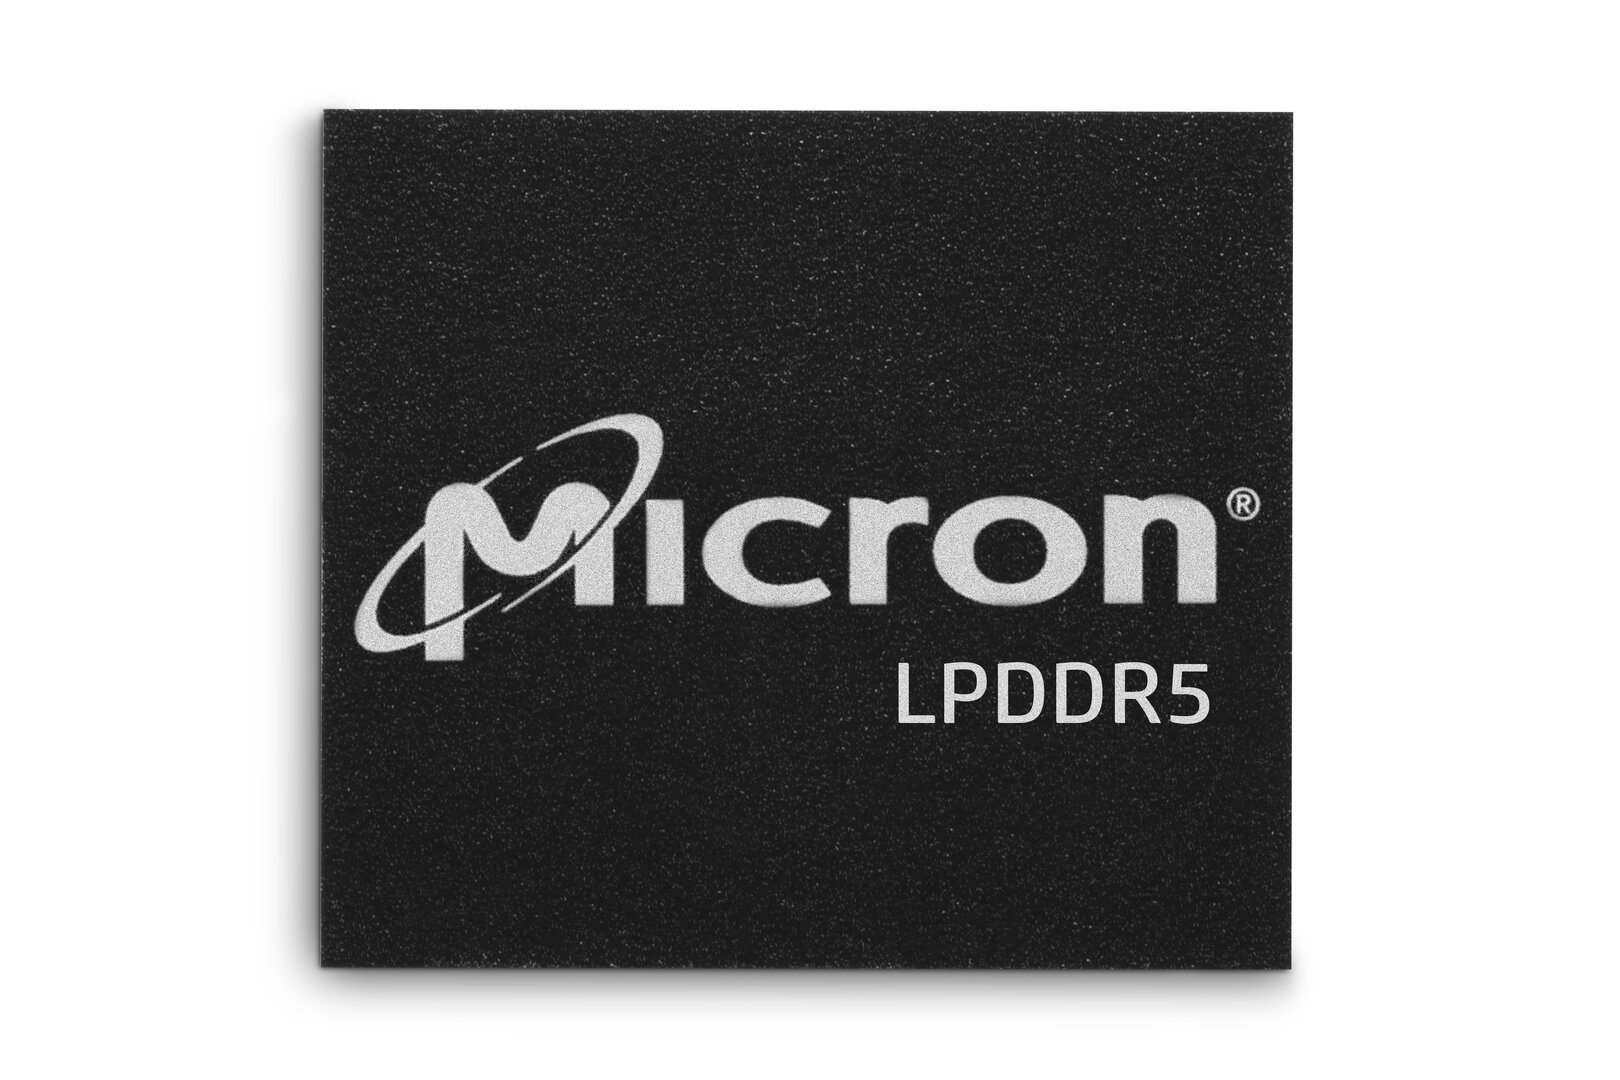 Micron LPDDR5 "class =" border-image